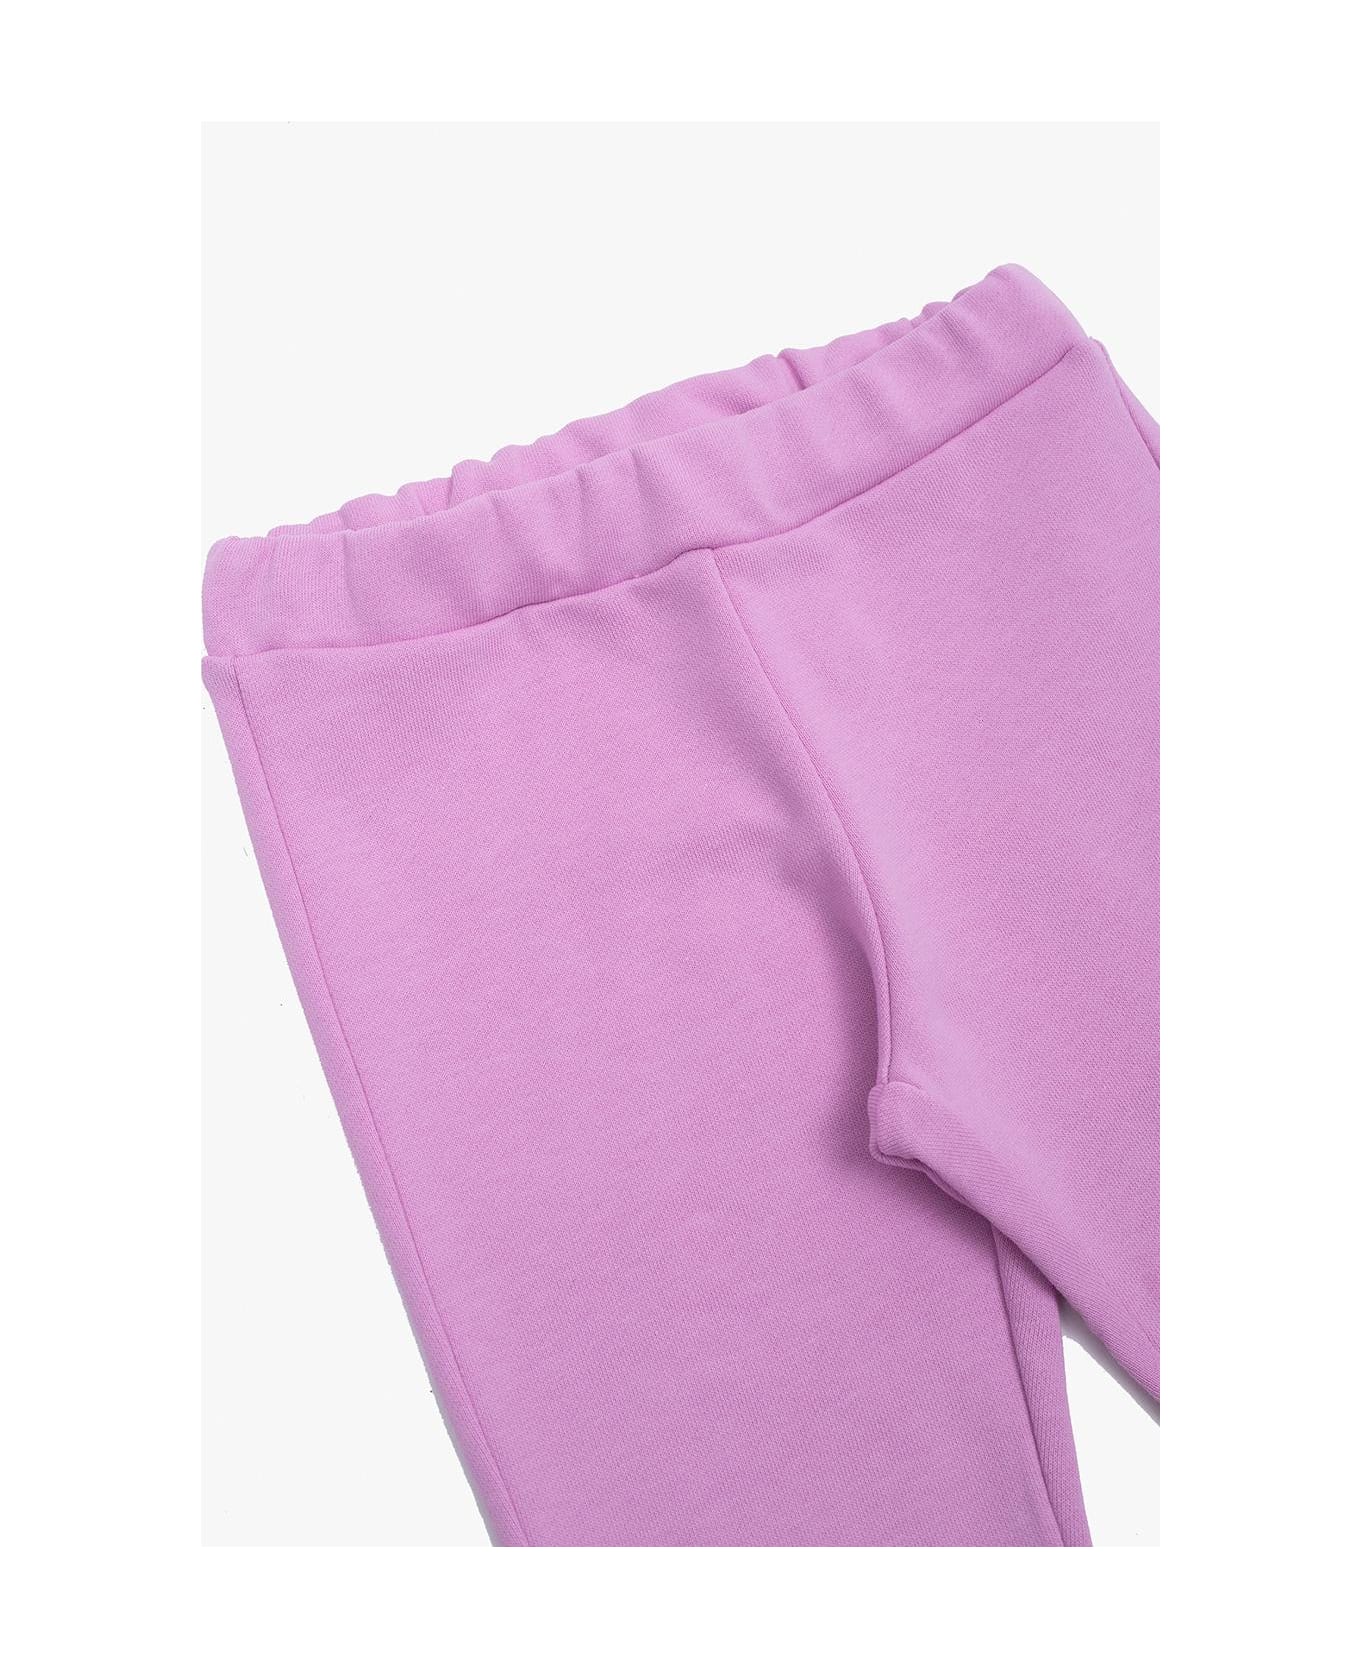 Fendi Sweatpants With Logo - Rosa